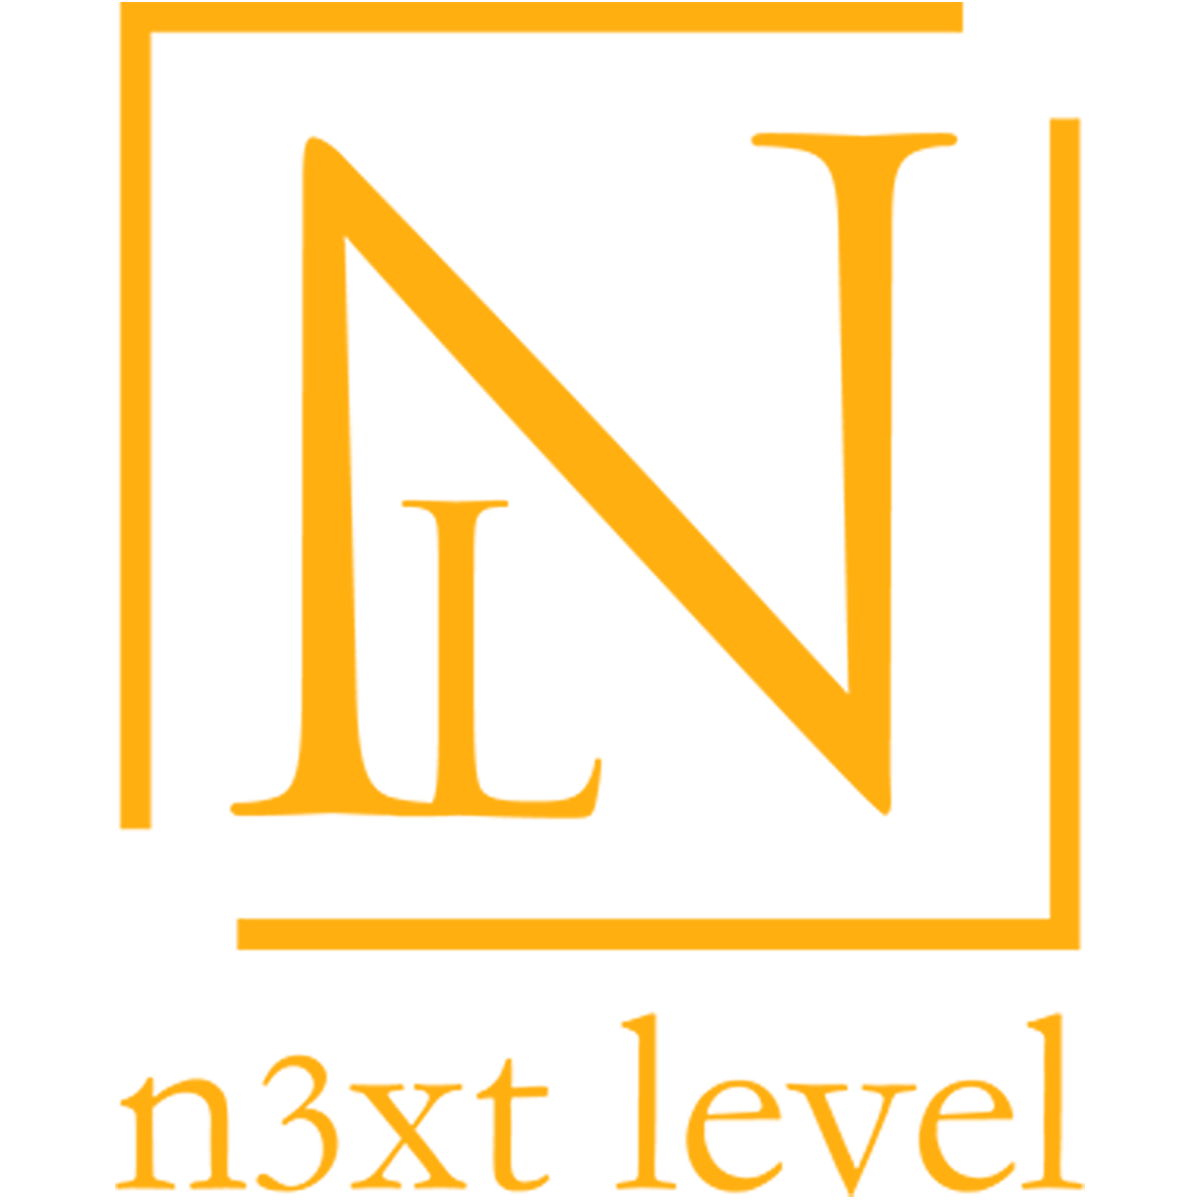 N3xt Level GmbH